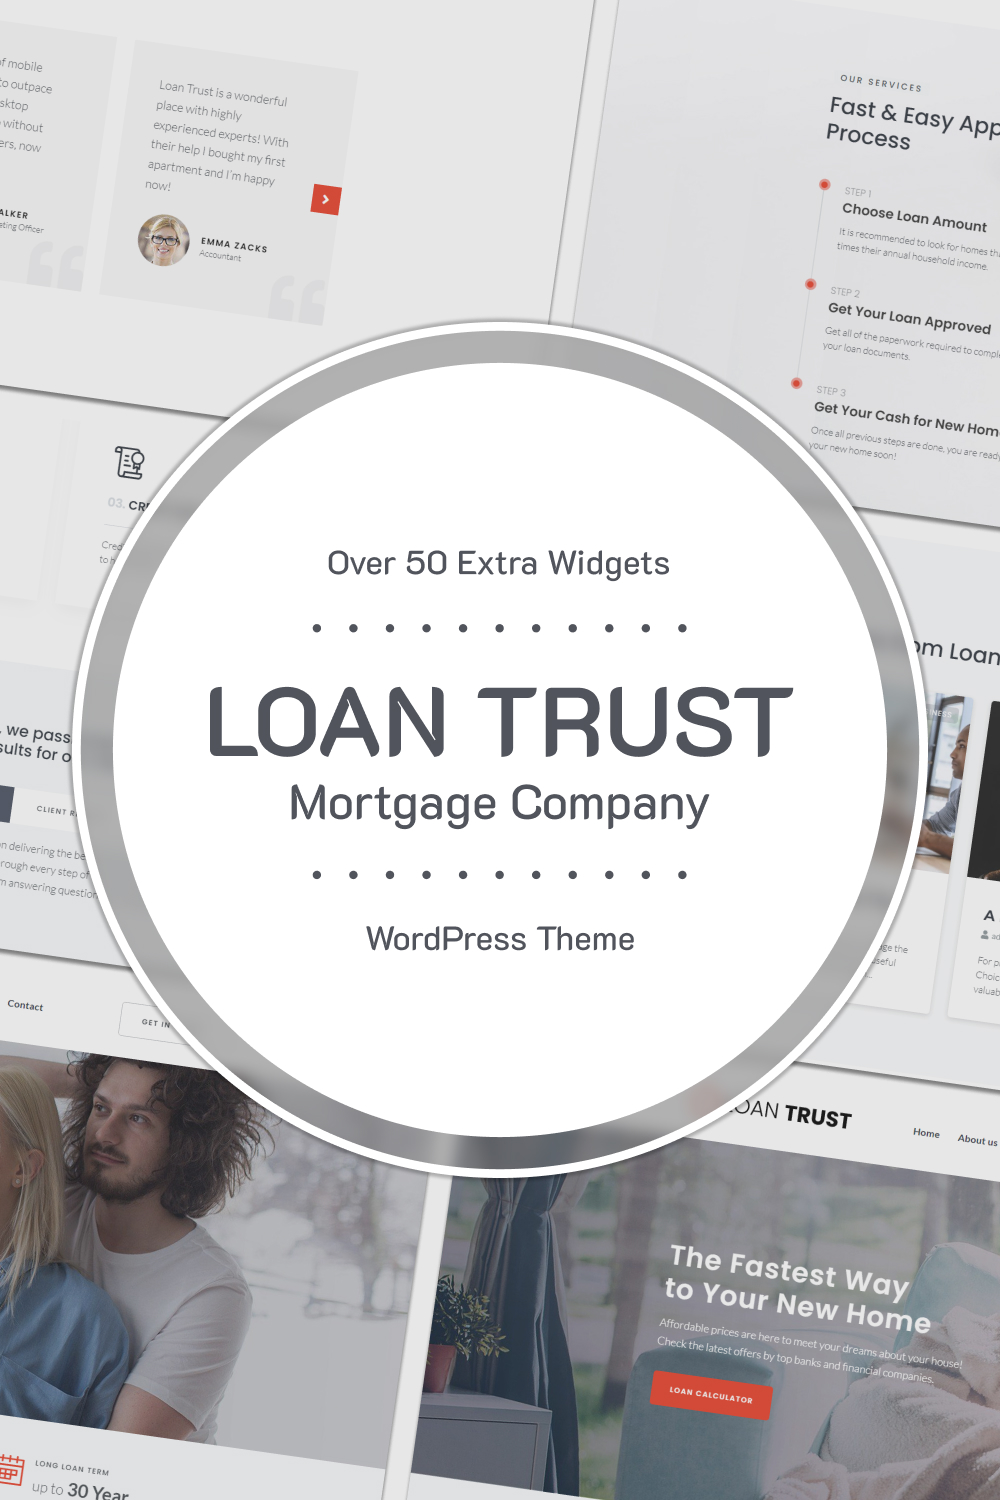 Pinterest illustrations of loan trust mortgage company wordpress elementor theme.